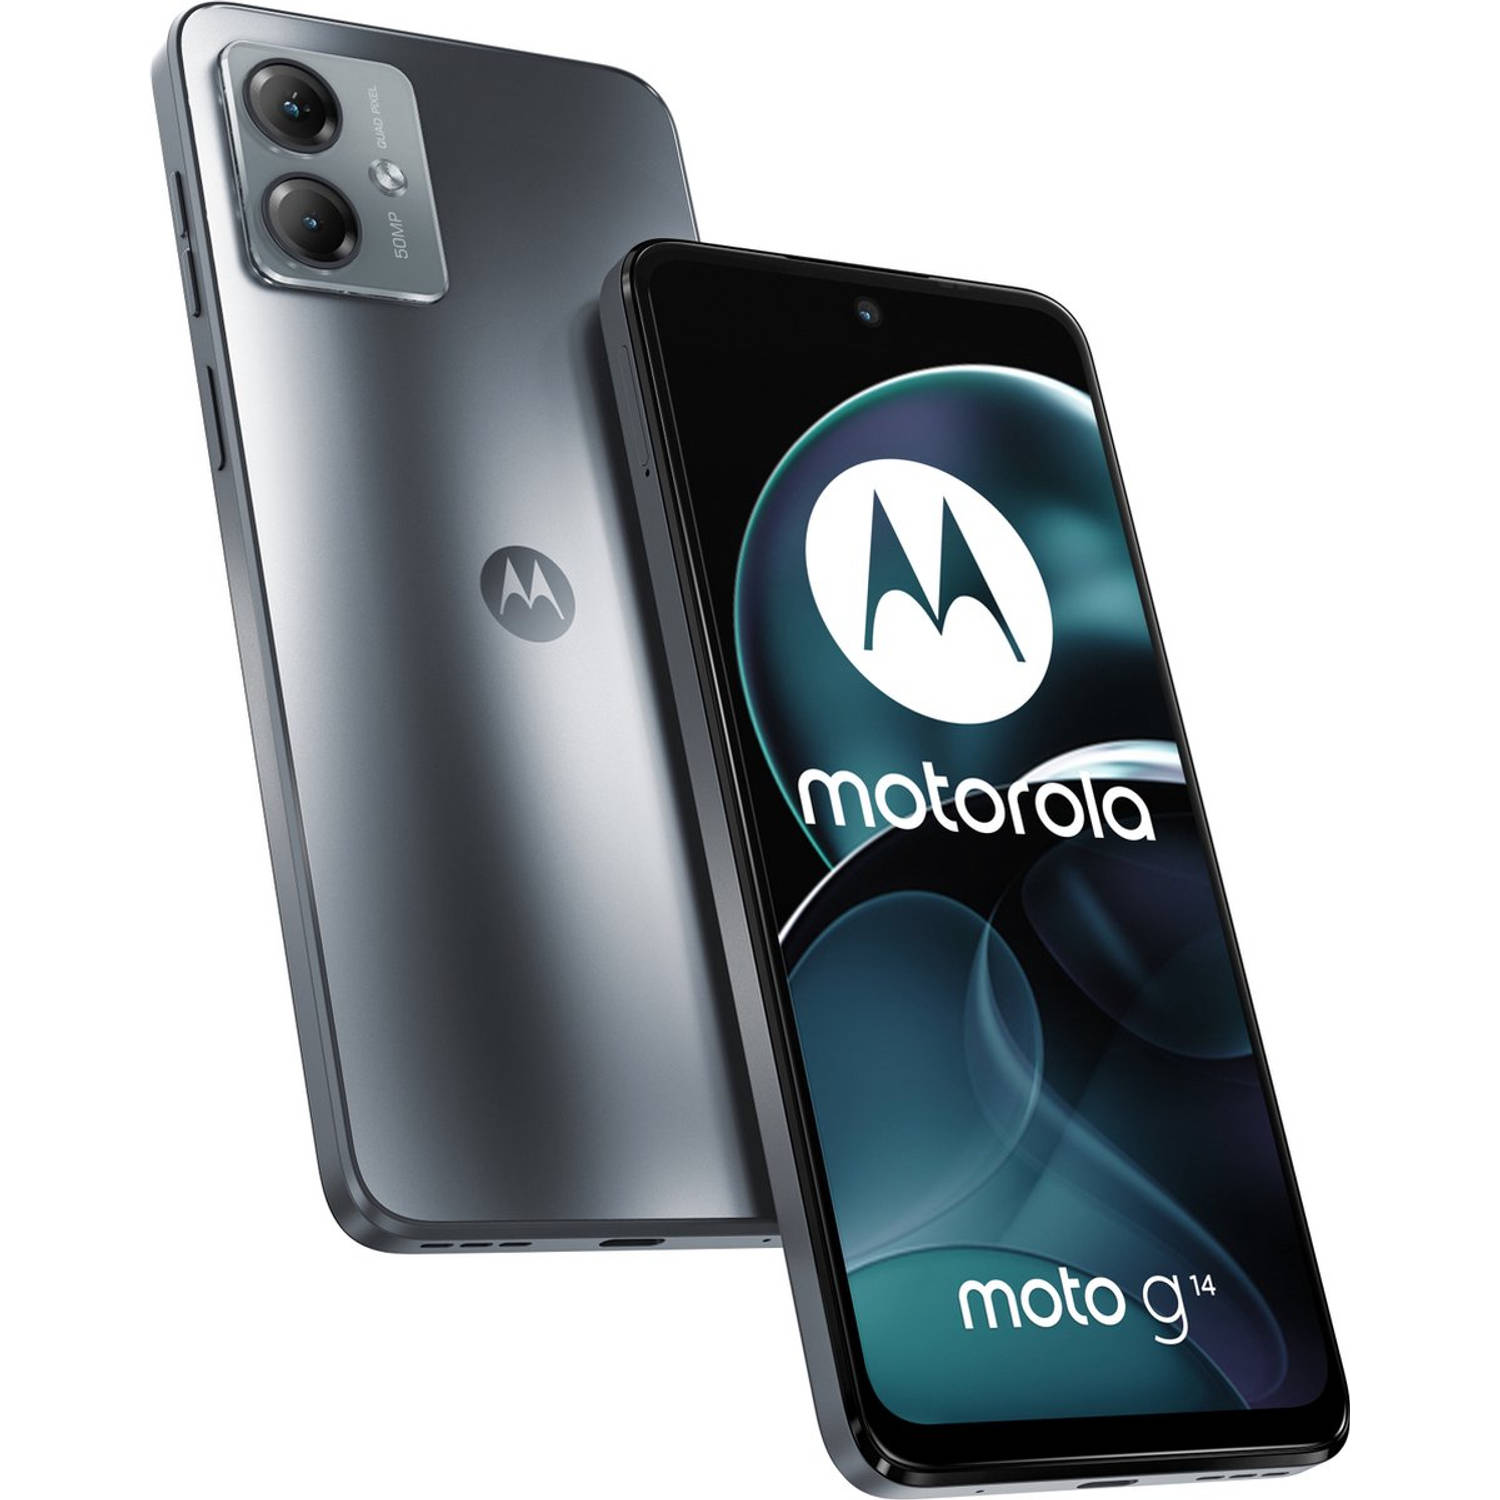 Motorola moto g14 - 256GB - Steel Grey